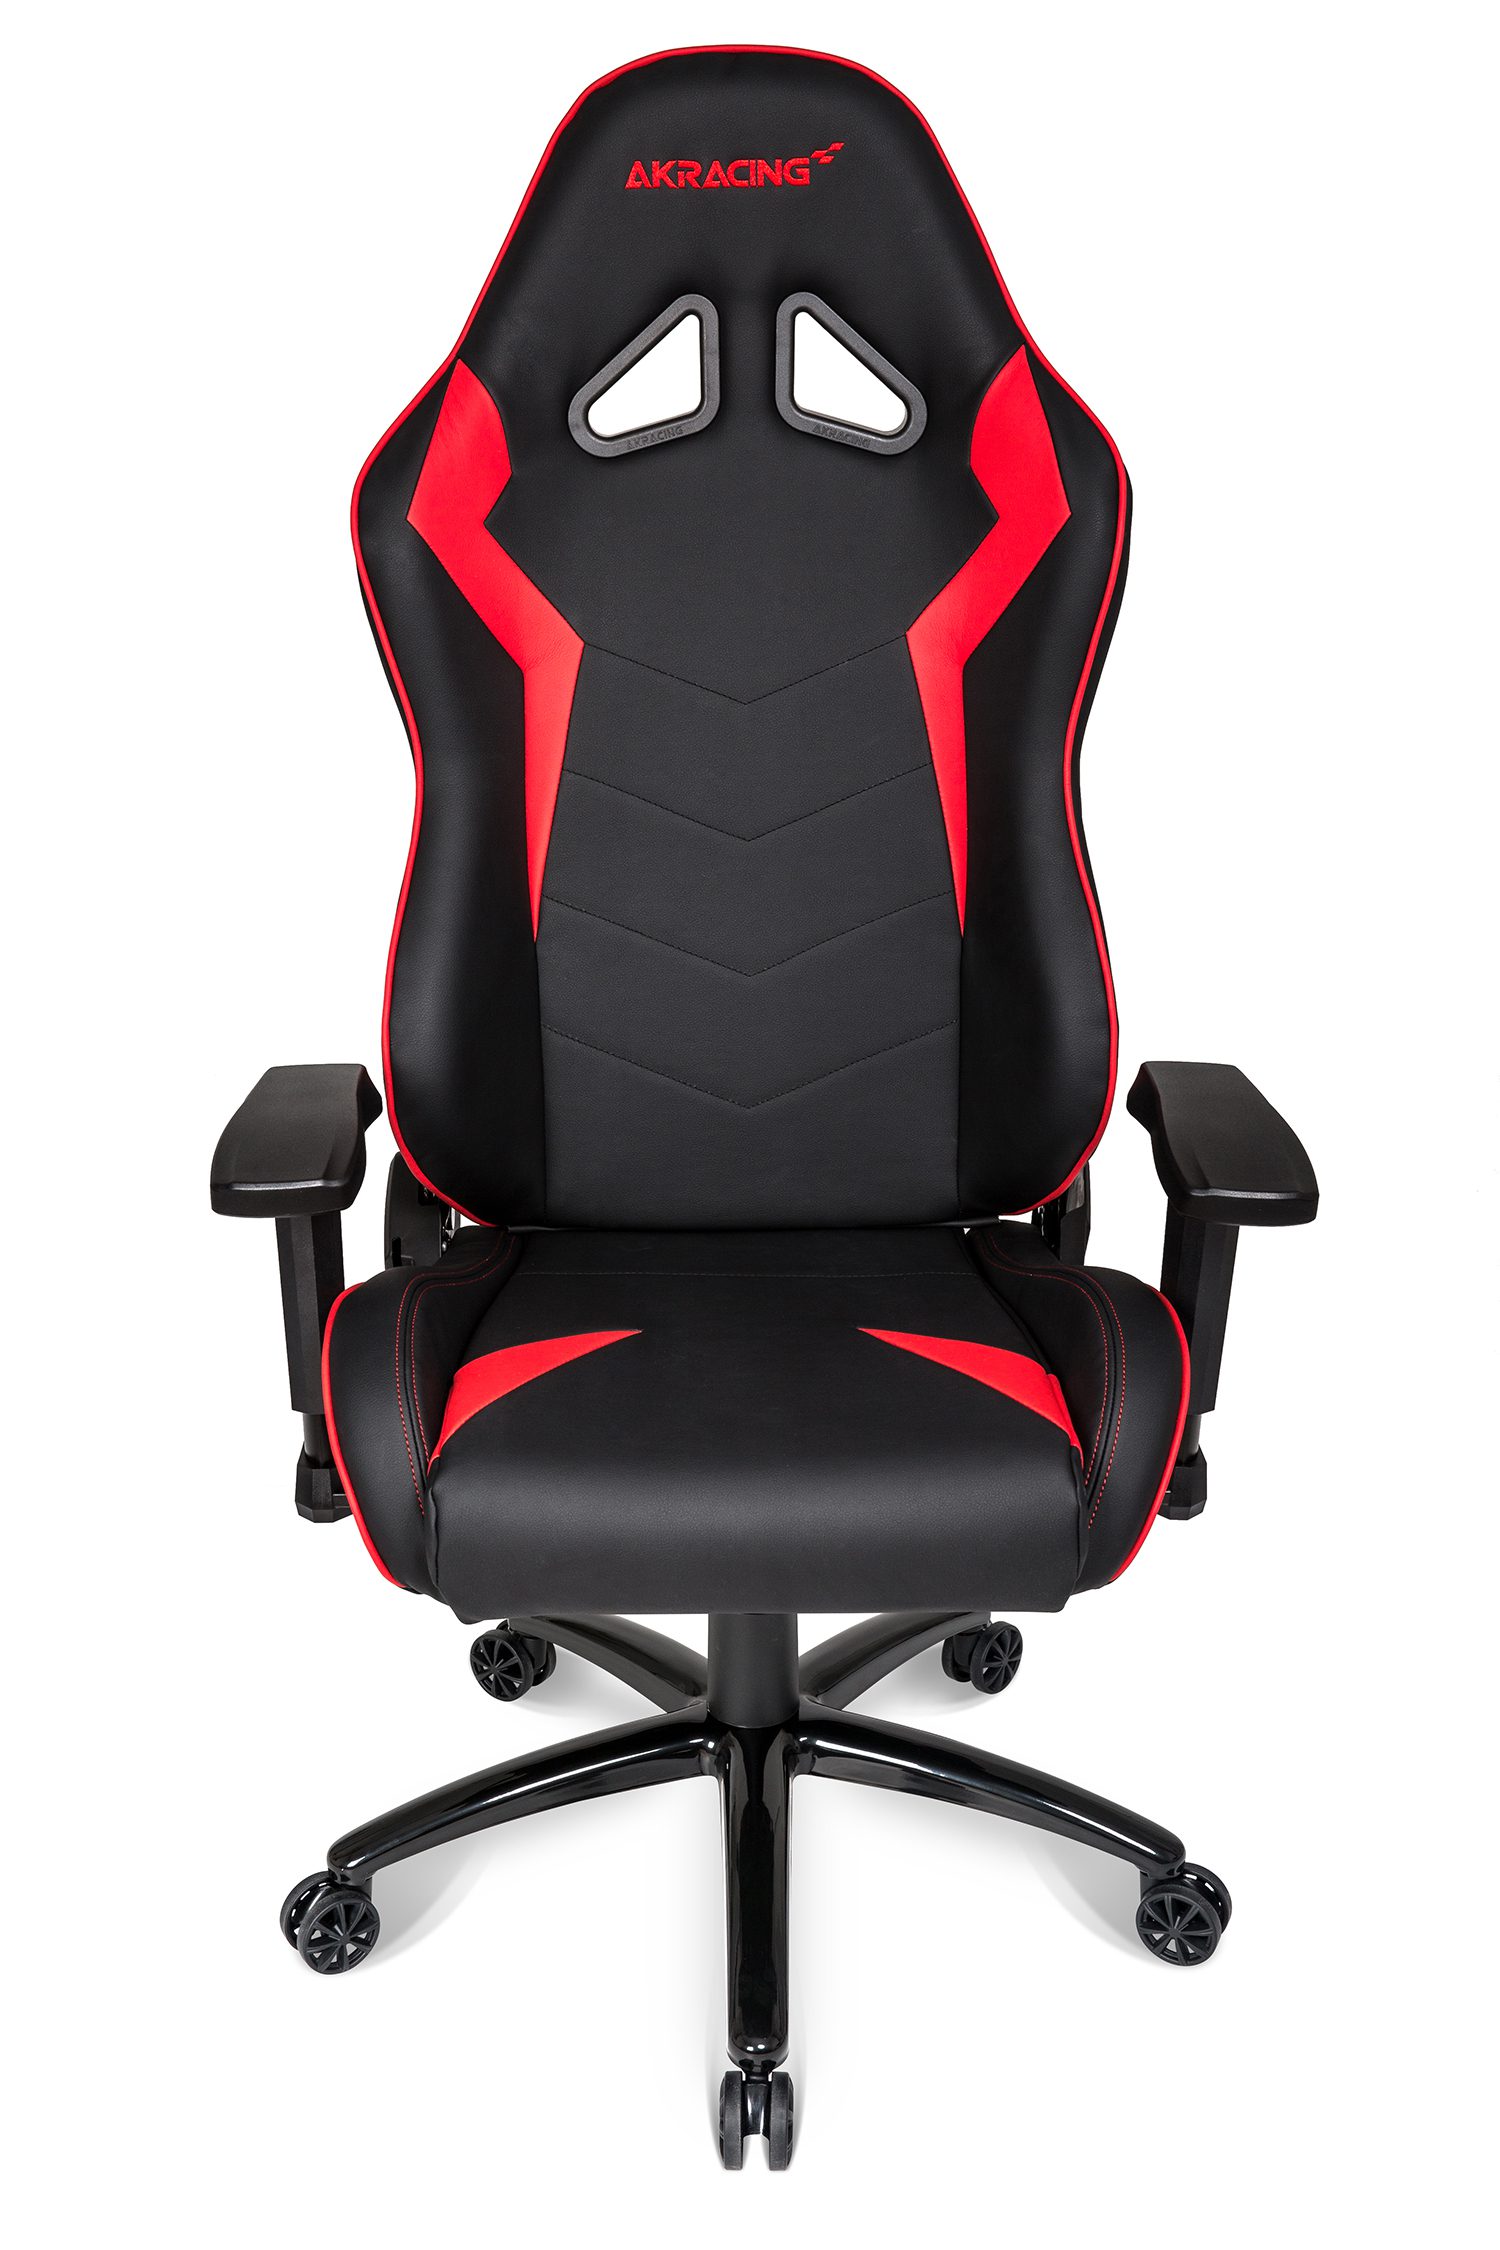 AKRACING K702B Octane Red Gaming Chair